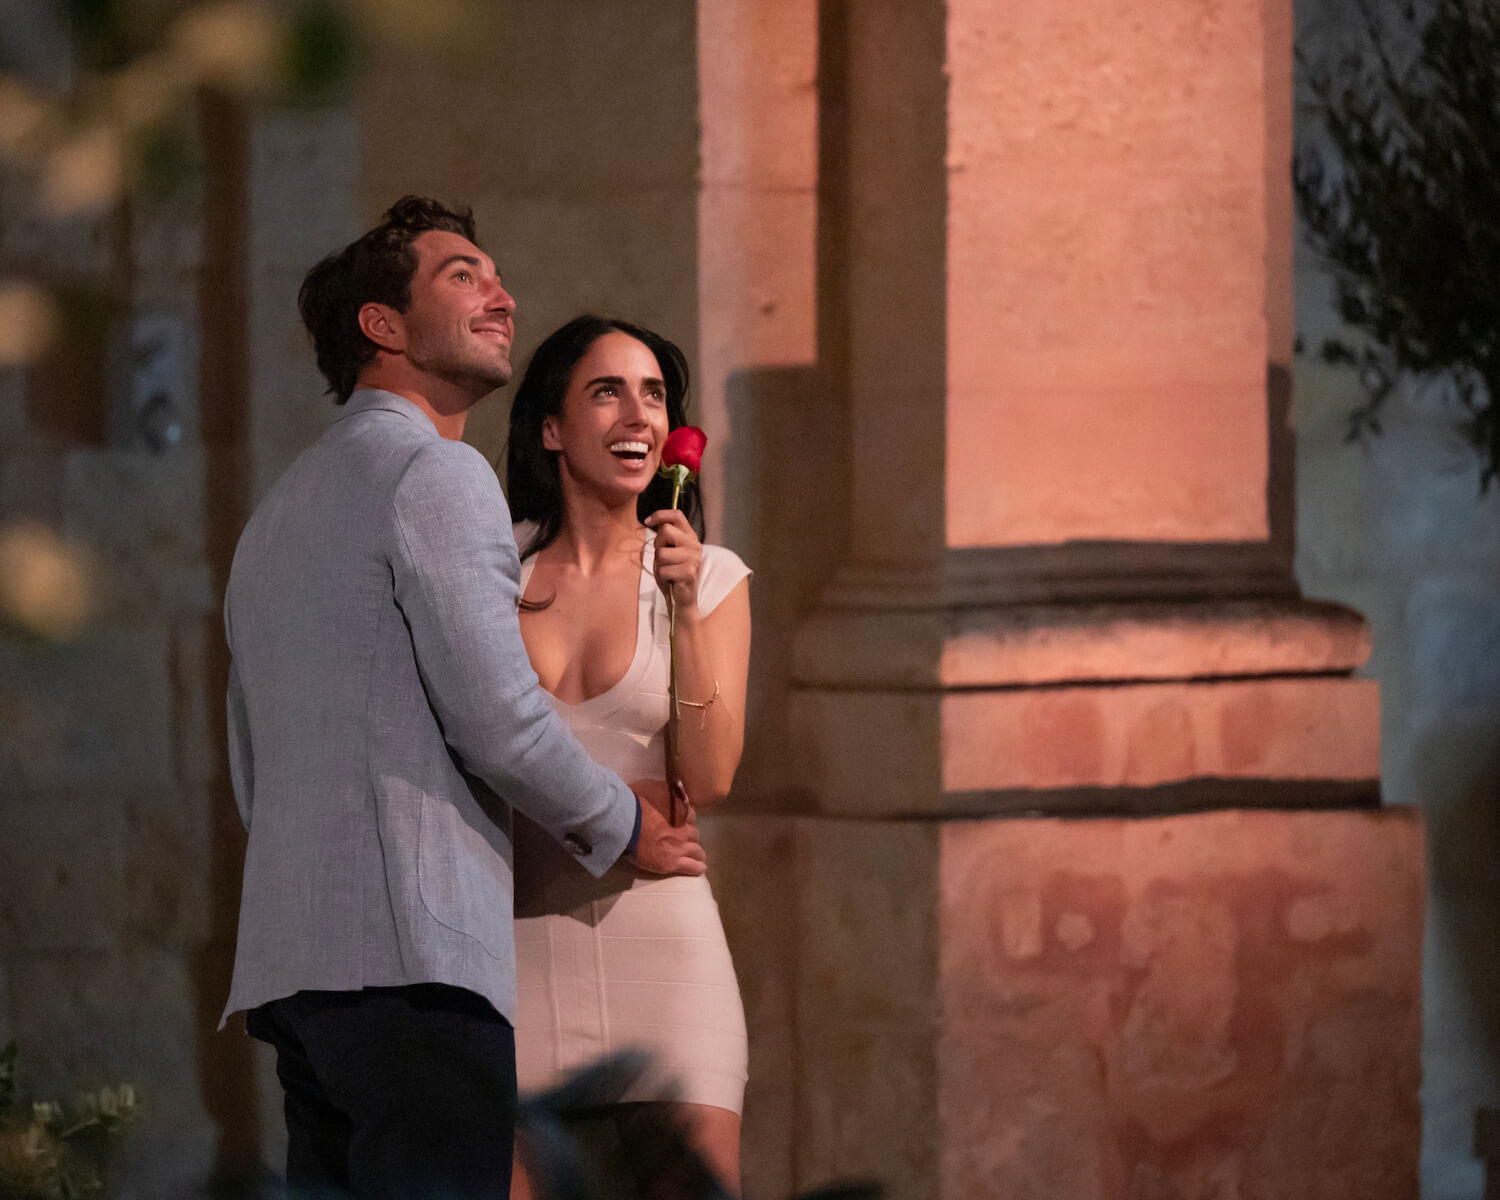 'The Bachelor' Season 28 star Joey Graziadei embracing Maria Georgas while she holds a rose